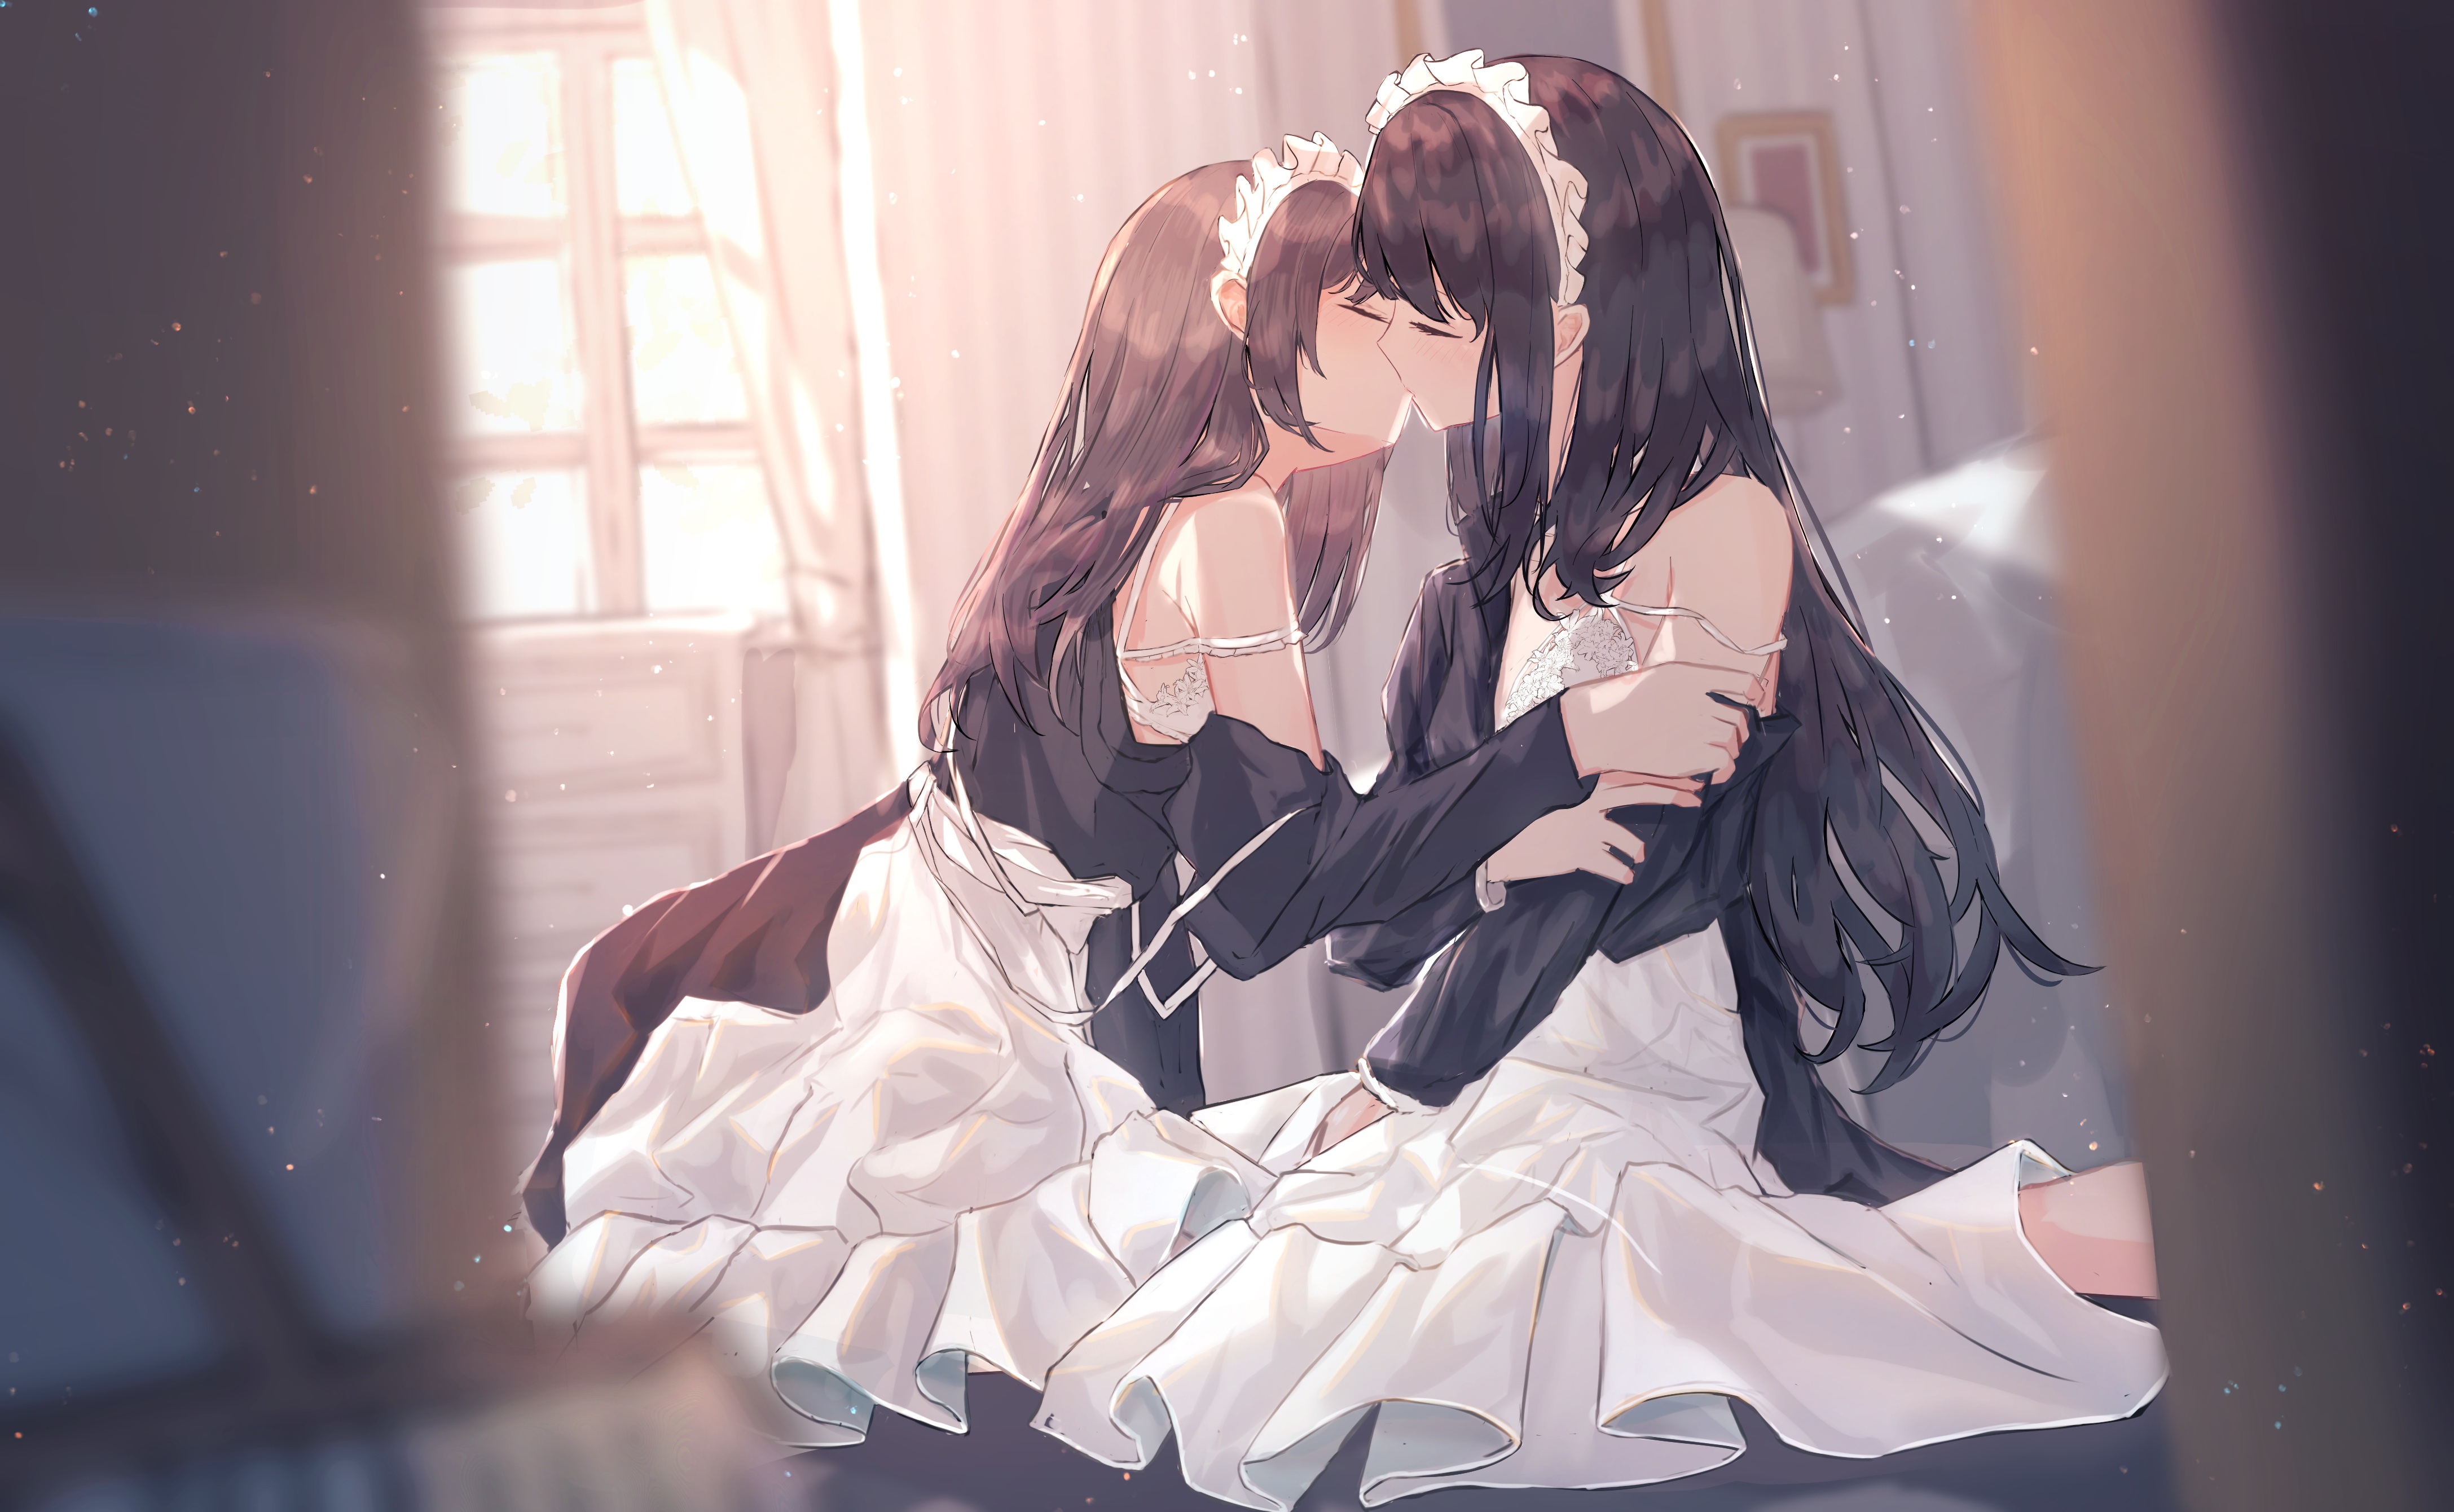 Lesbians Closed Eyes Two Women Anime Anime Girls Kissing Yuri Maid 4350x2680 Wallpaper 4670